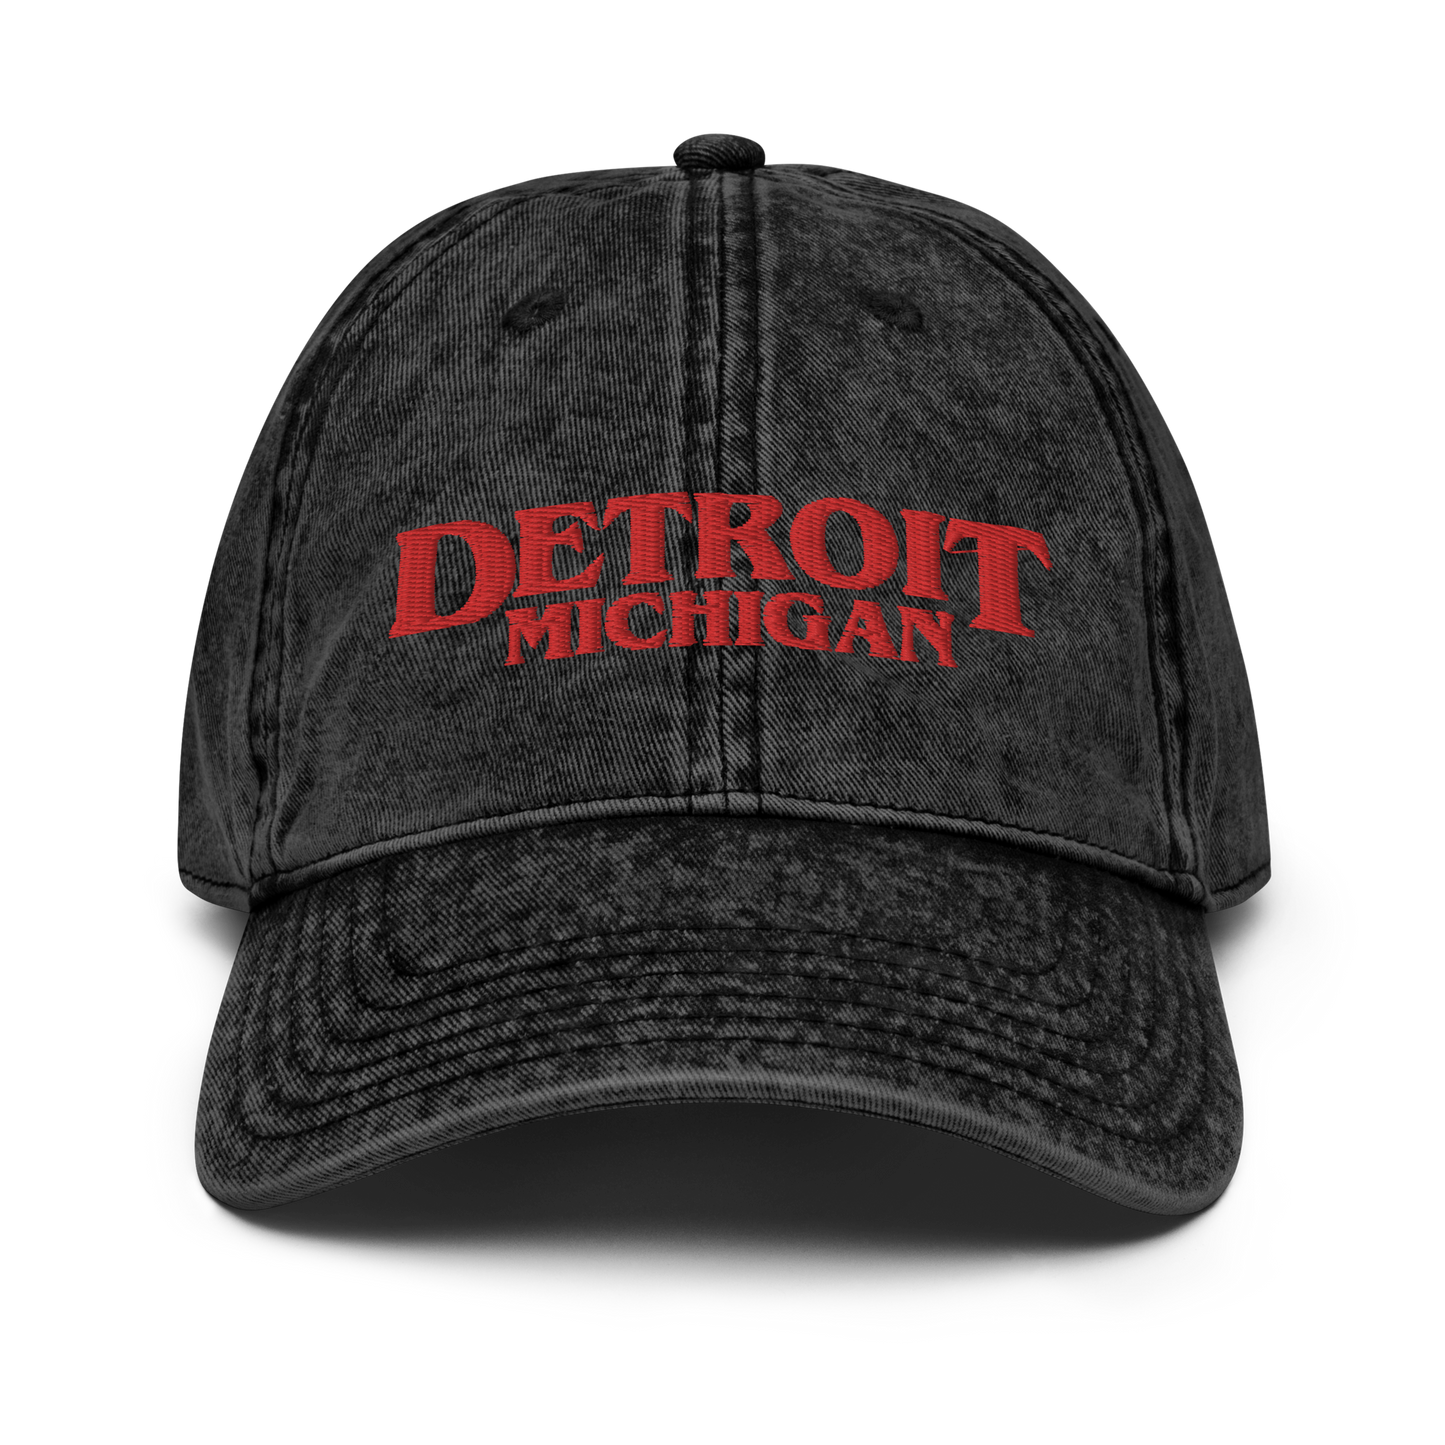 'Detroit Michigan' Vintage Baseball Cap (1980s Drama Parody)